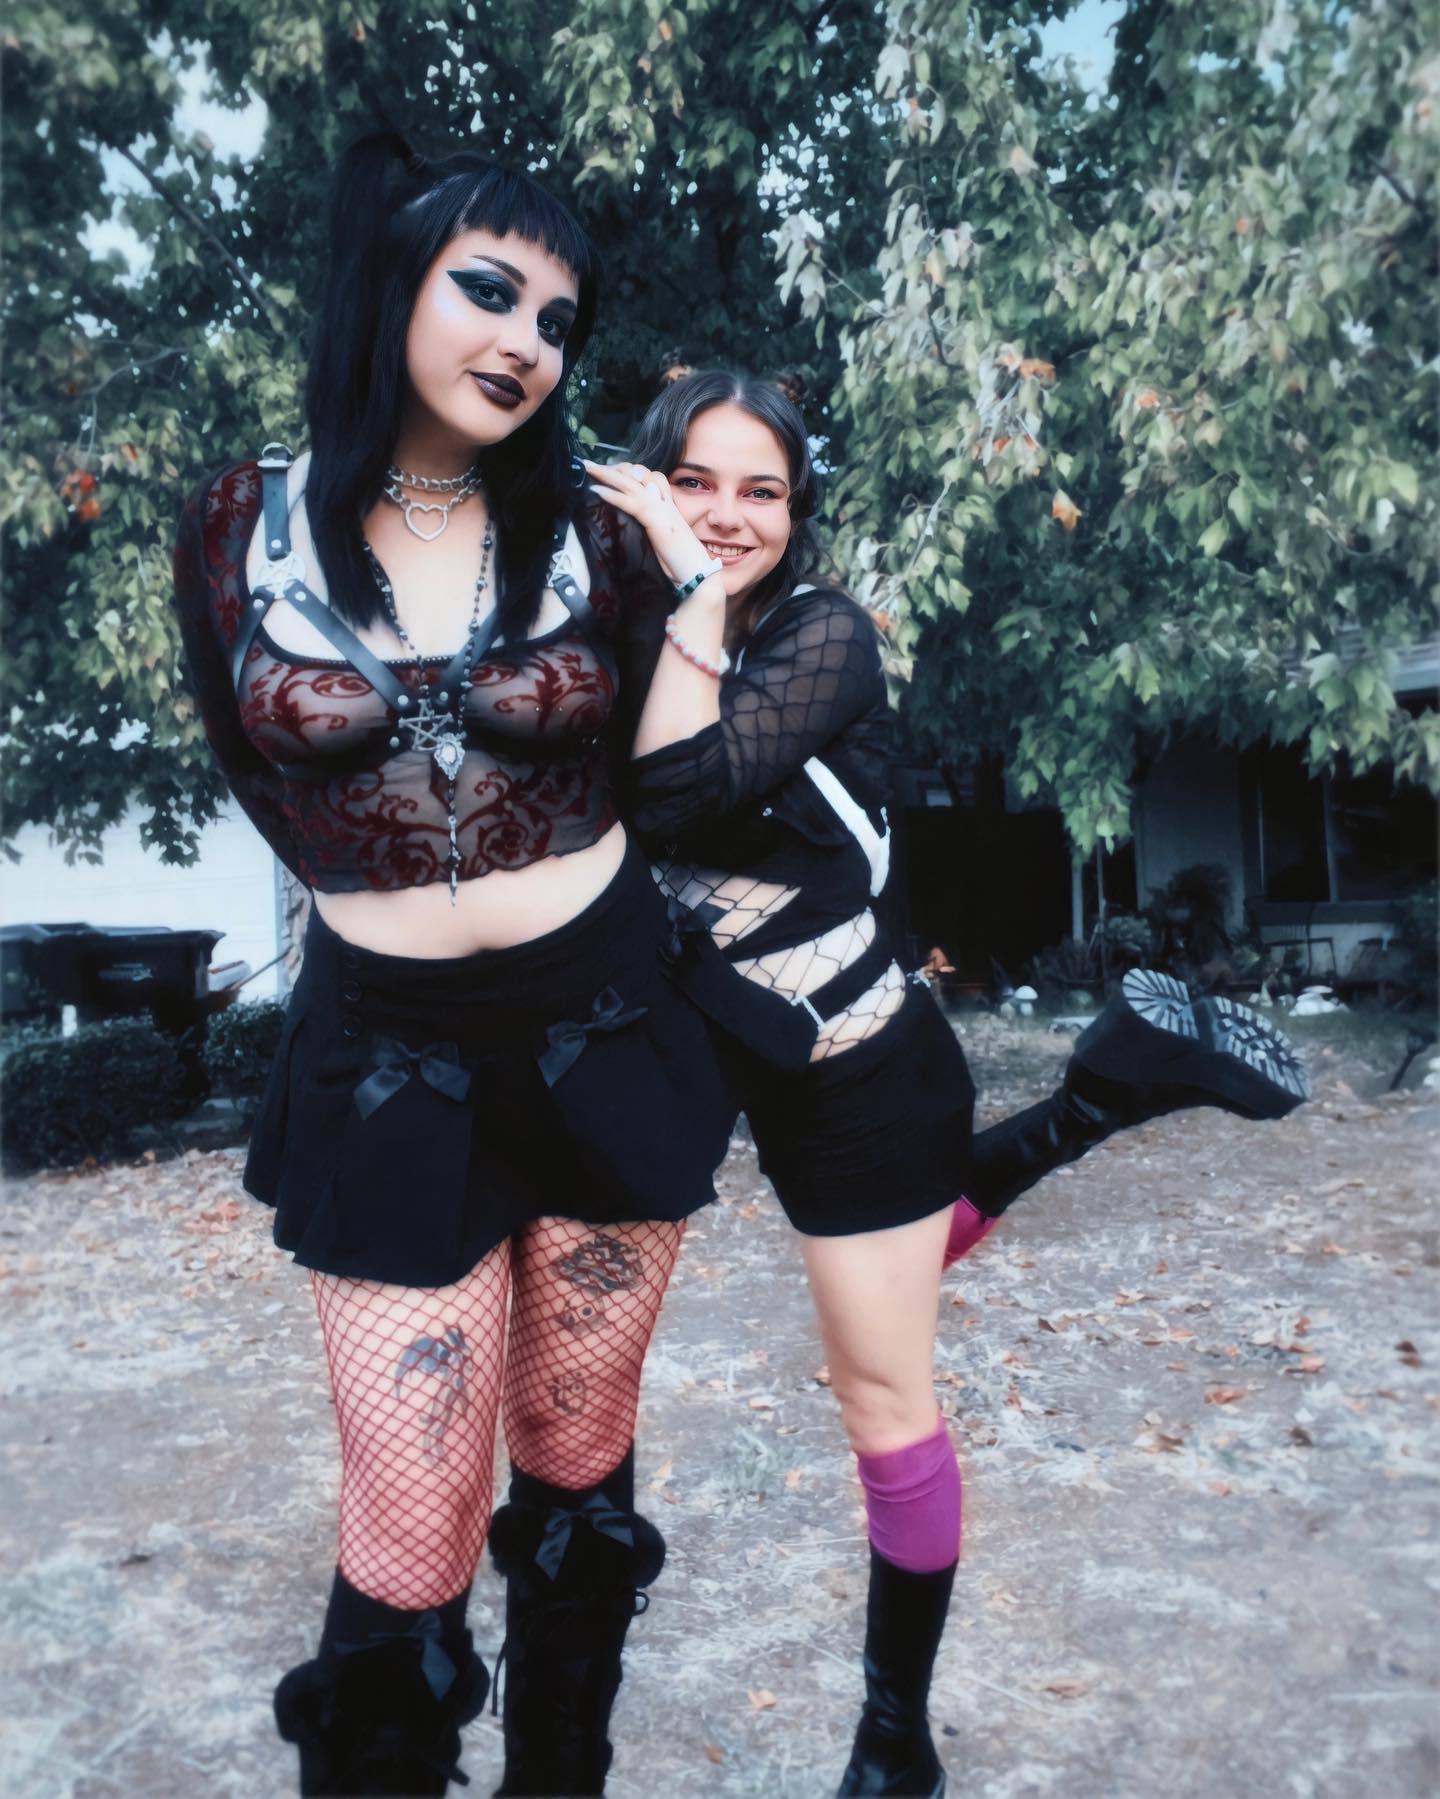 We look so cuteee 🦇🕯️❣️
•
•
#gothgirl #grungegirl #altgirl #grungefashion #grungeaccount #gothic #darkfairycore #fairygrunge #vampire #demoniacult #witchyvibes #witchcostume #fallaesthetic #halloween #grungefeed #gothicmakeup #egirl #egirlaesthetic @houseofwidow @demonia.shoes #girlswithtattoos #tattooideas #tattoo #girlswholikegirls #darkacademia #emocore #mallgoth #ootd #ootdfashion #fashioninspiration #alternative #alternativefashion @thegravegirls